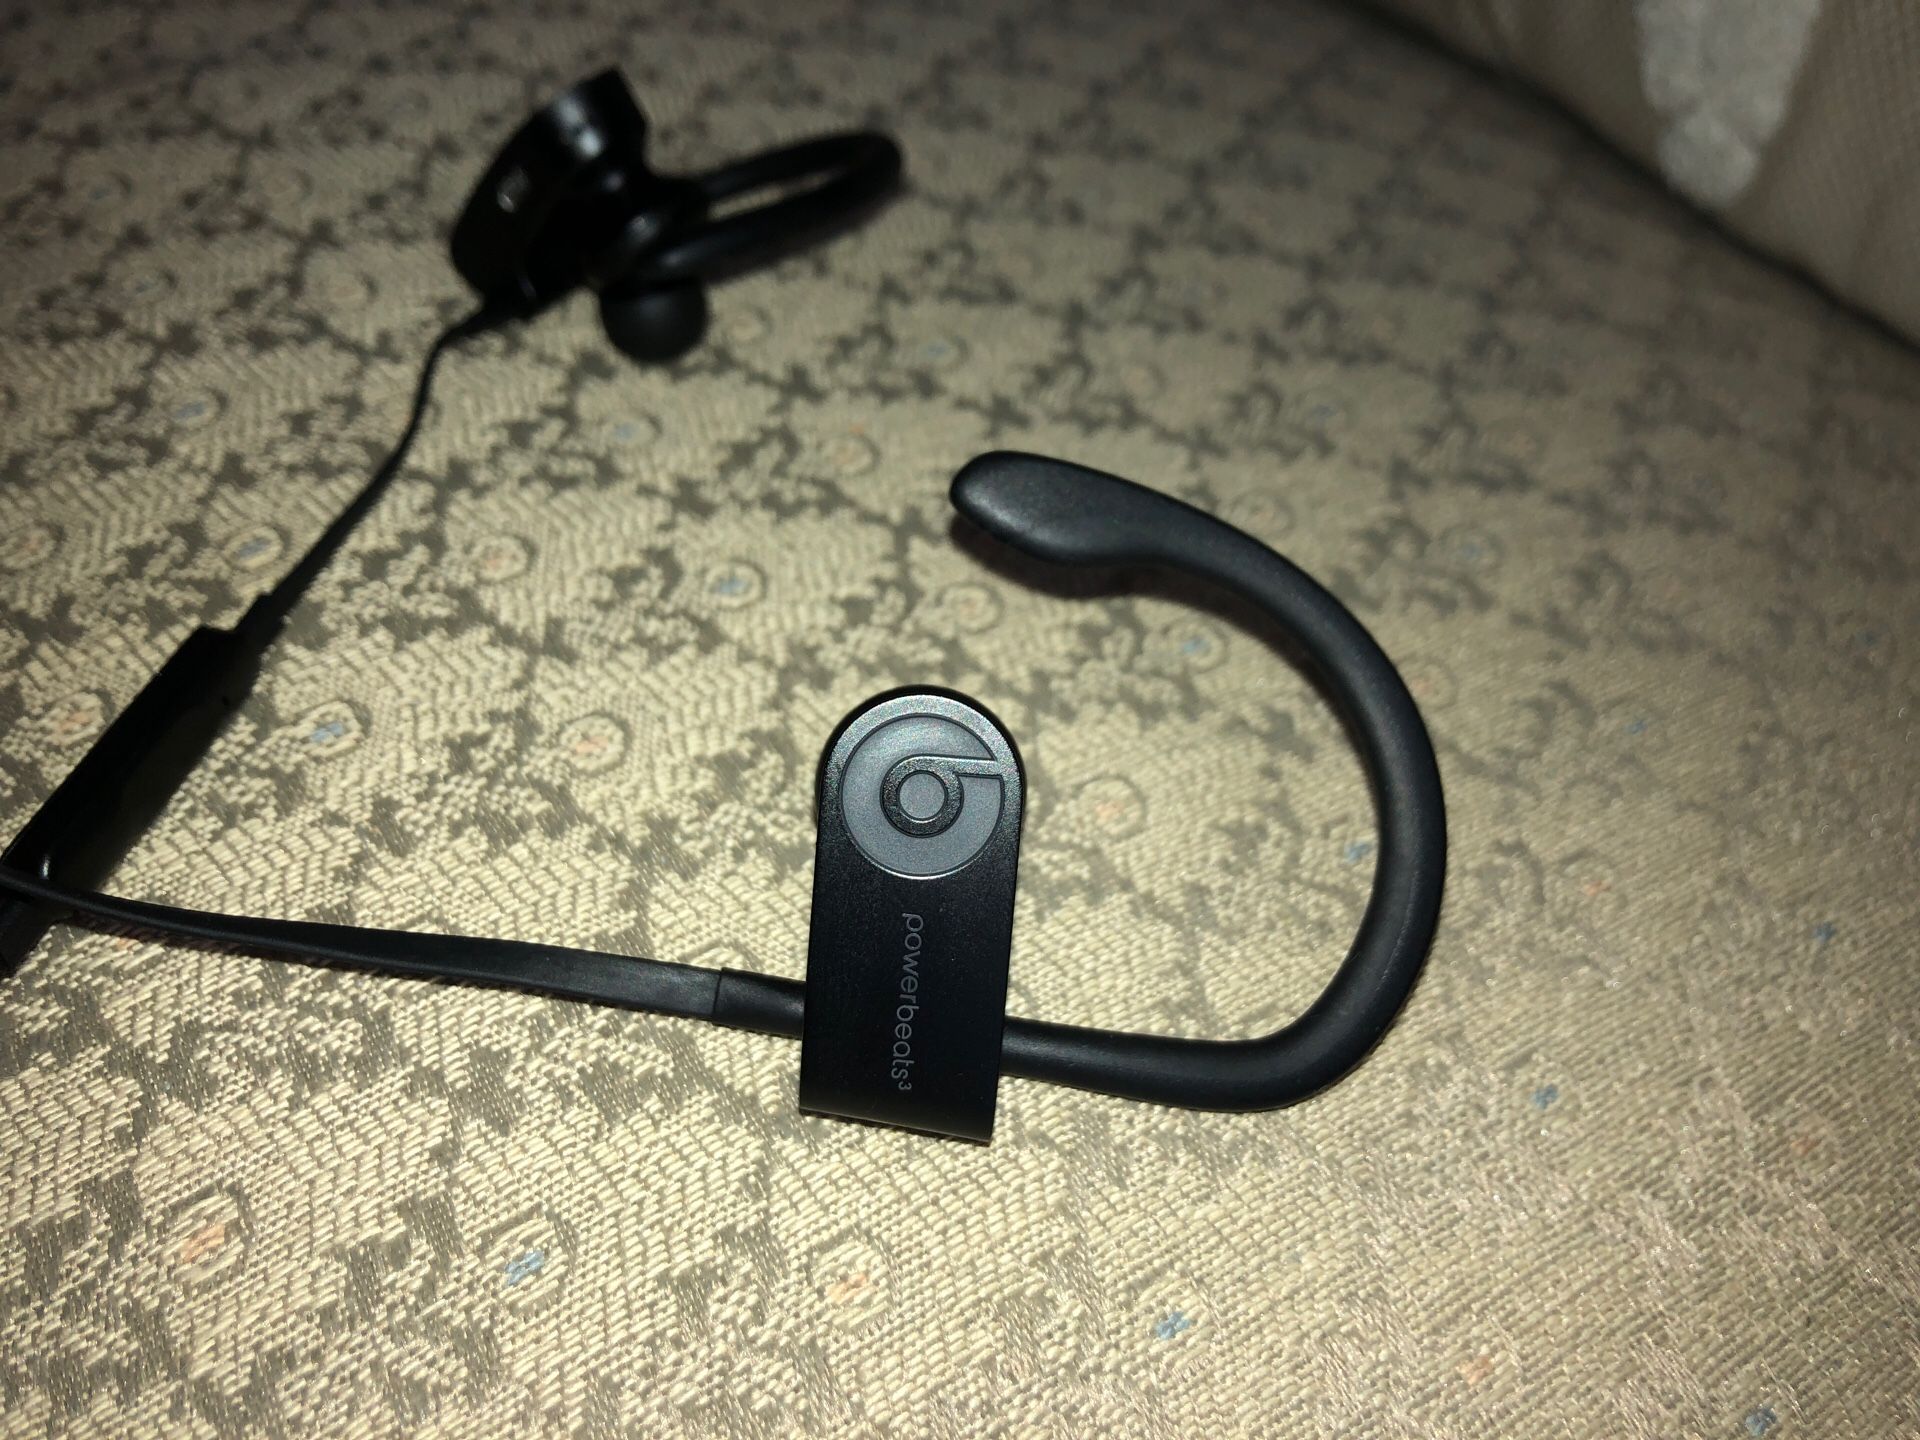 Power3 Beats Solo by Dre wireless Bluetooth headphones